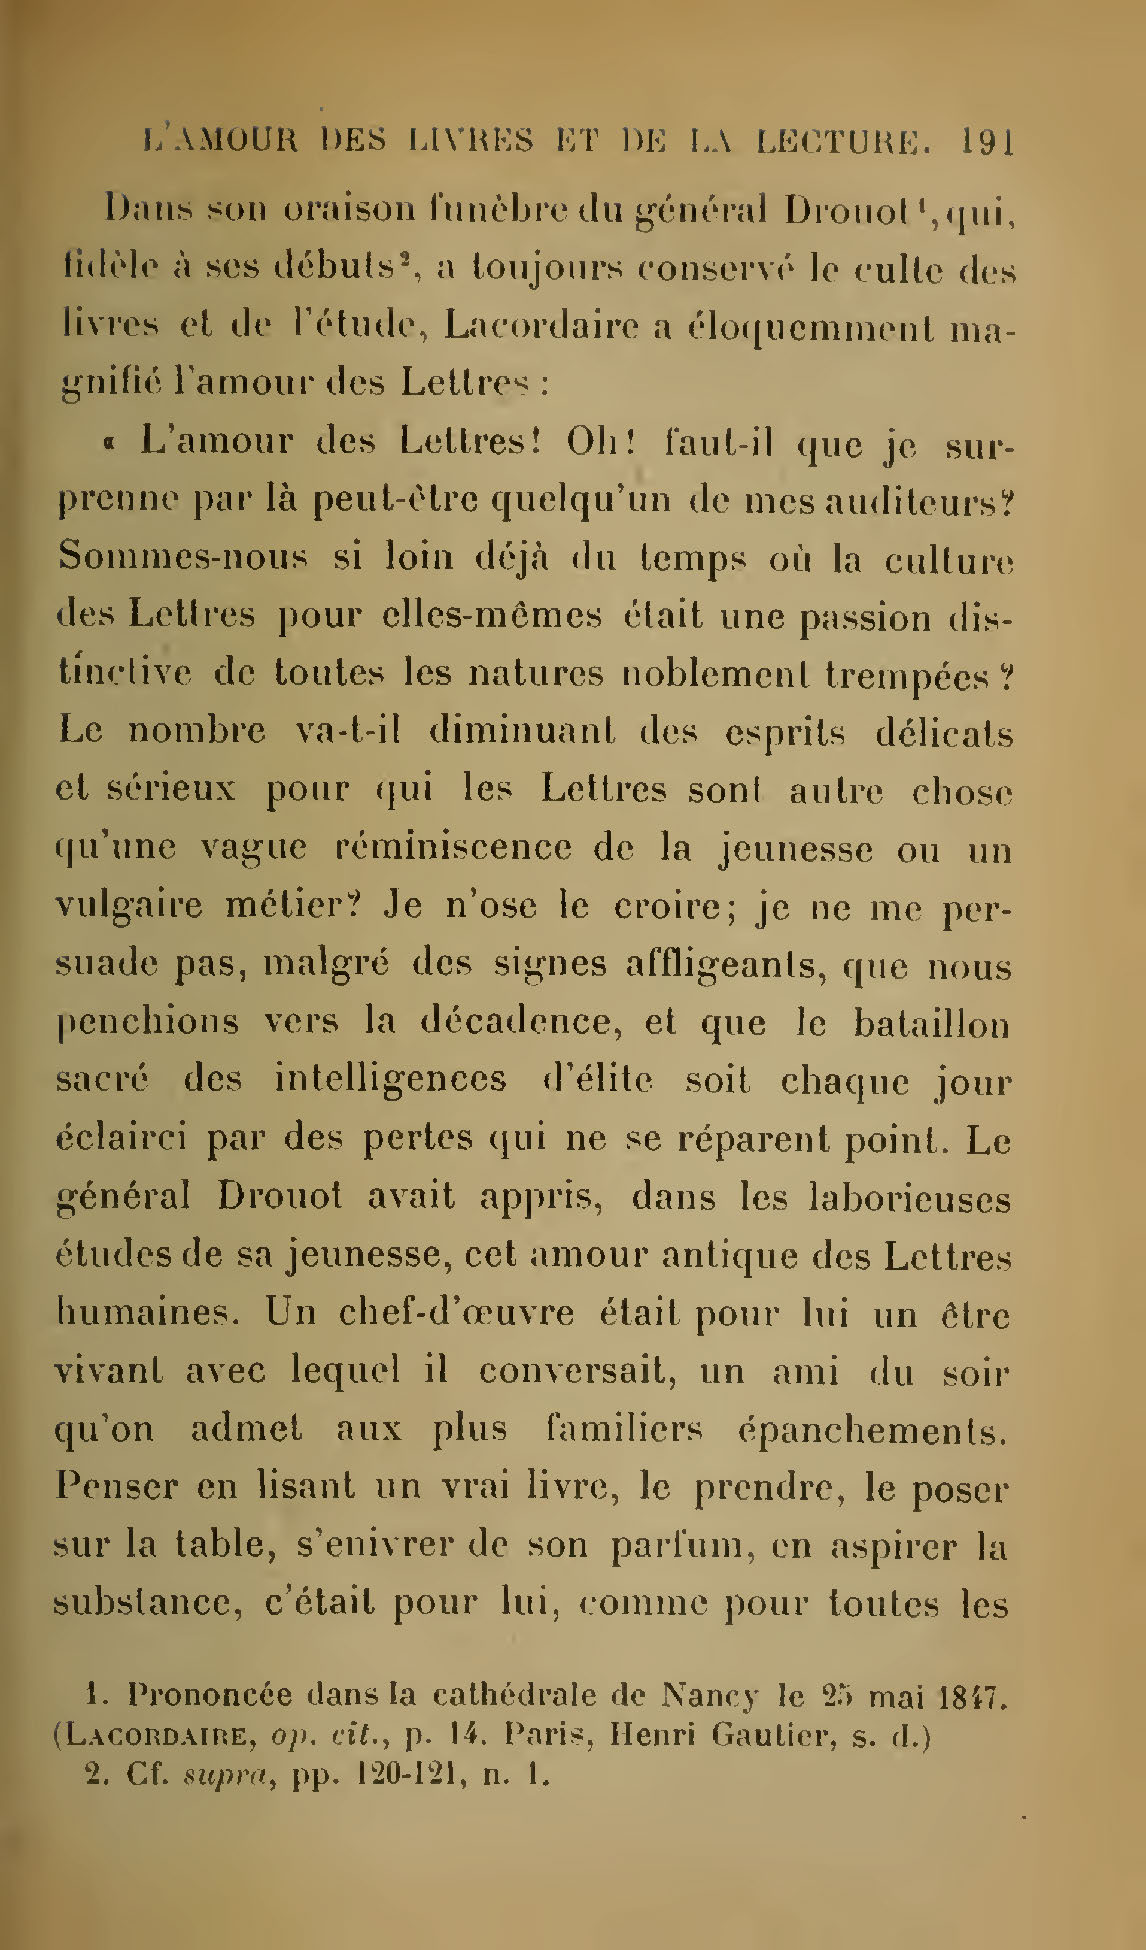 Albert Cim, Le Livre, t. I, p. 191.